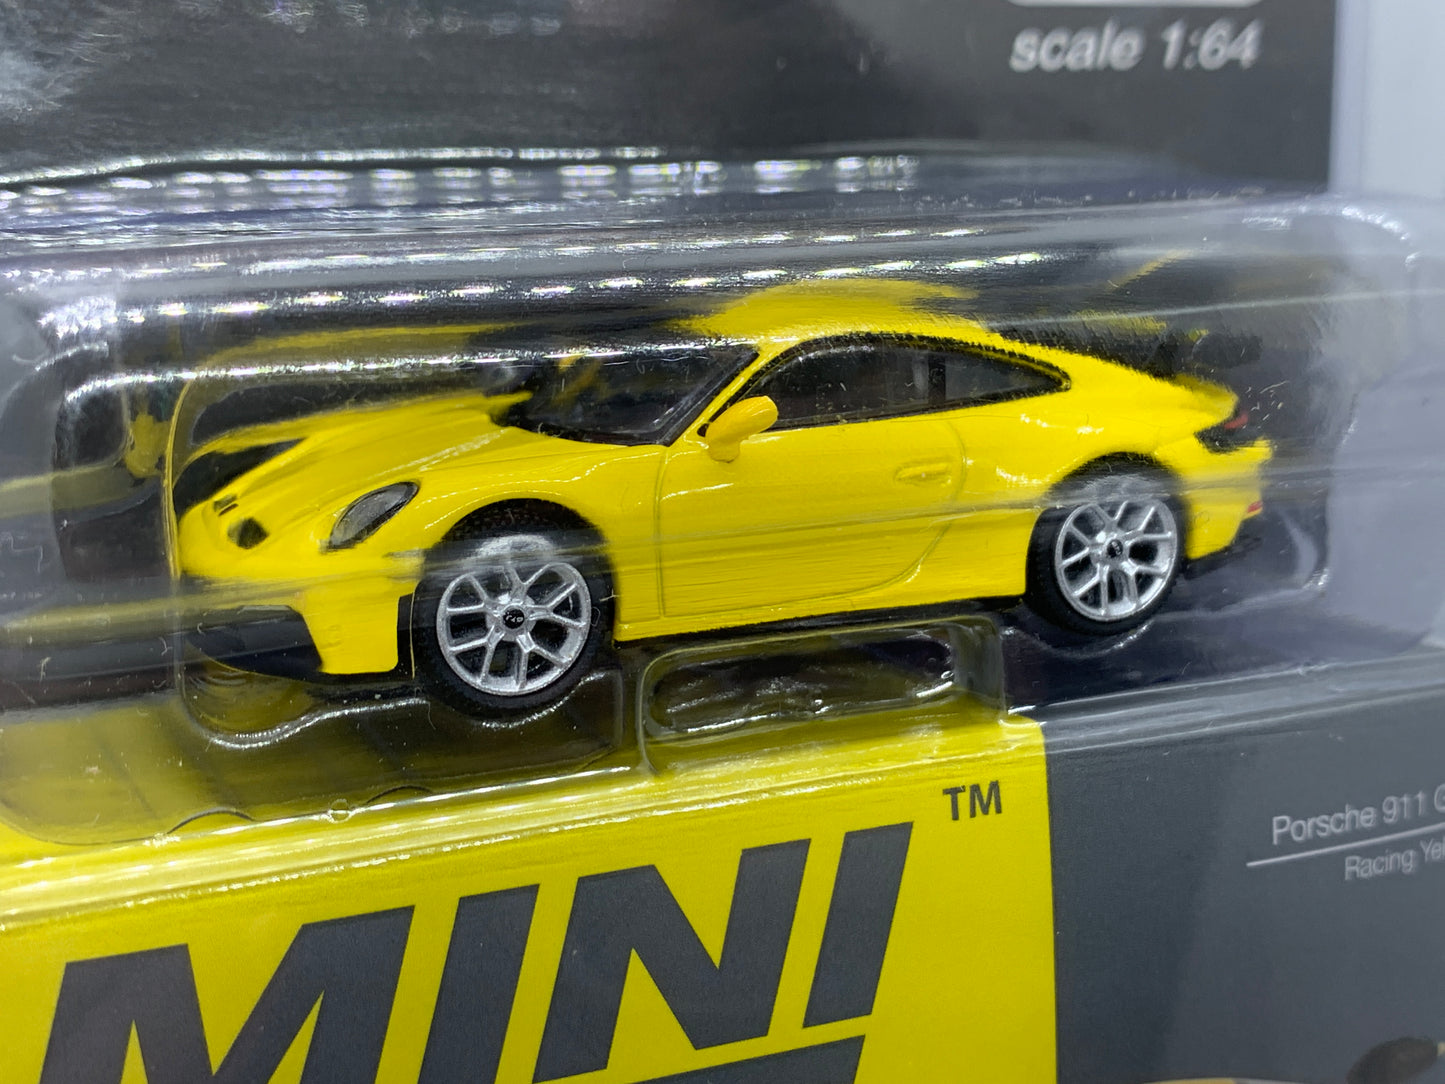 MINI GT - Porsche 911 GT3 Racing Yellow - Display Blister Packaging